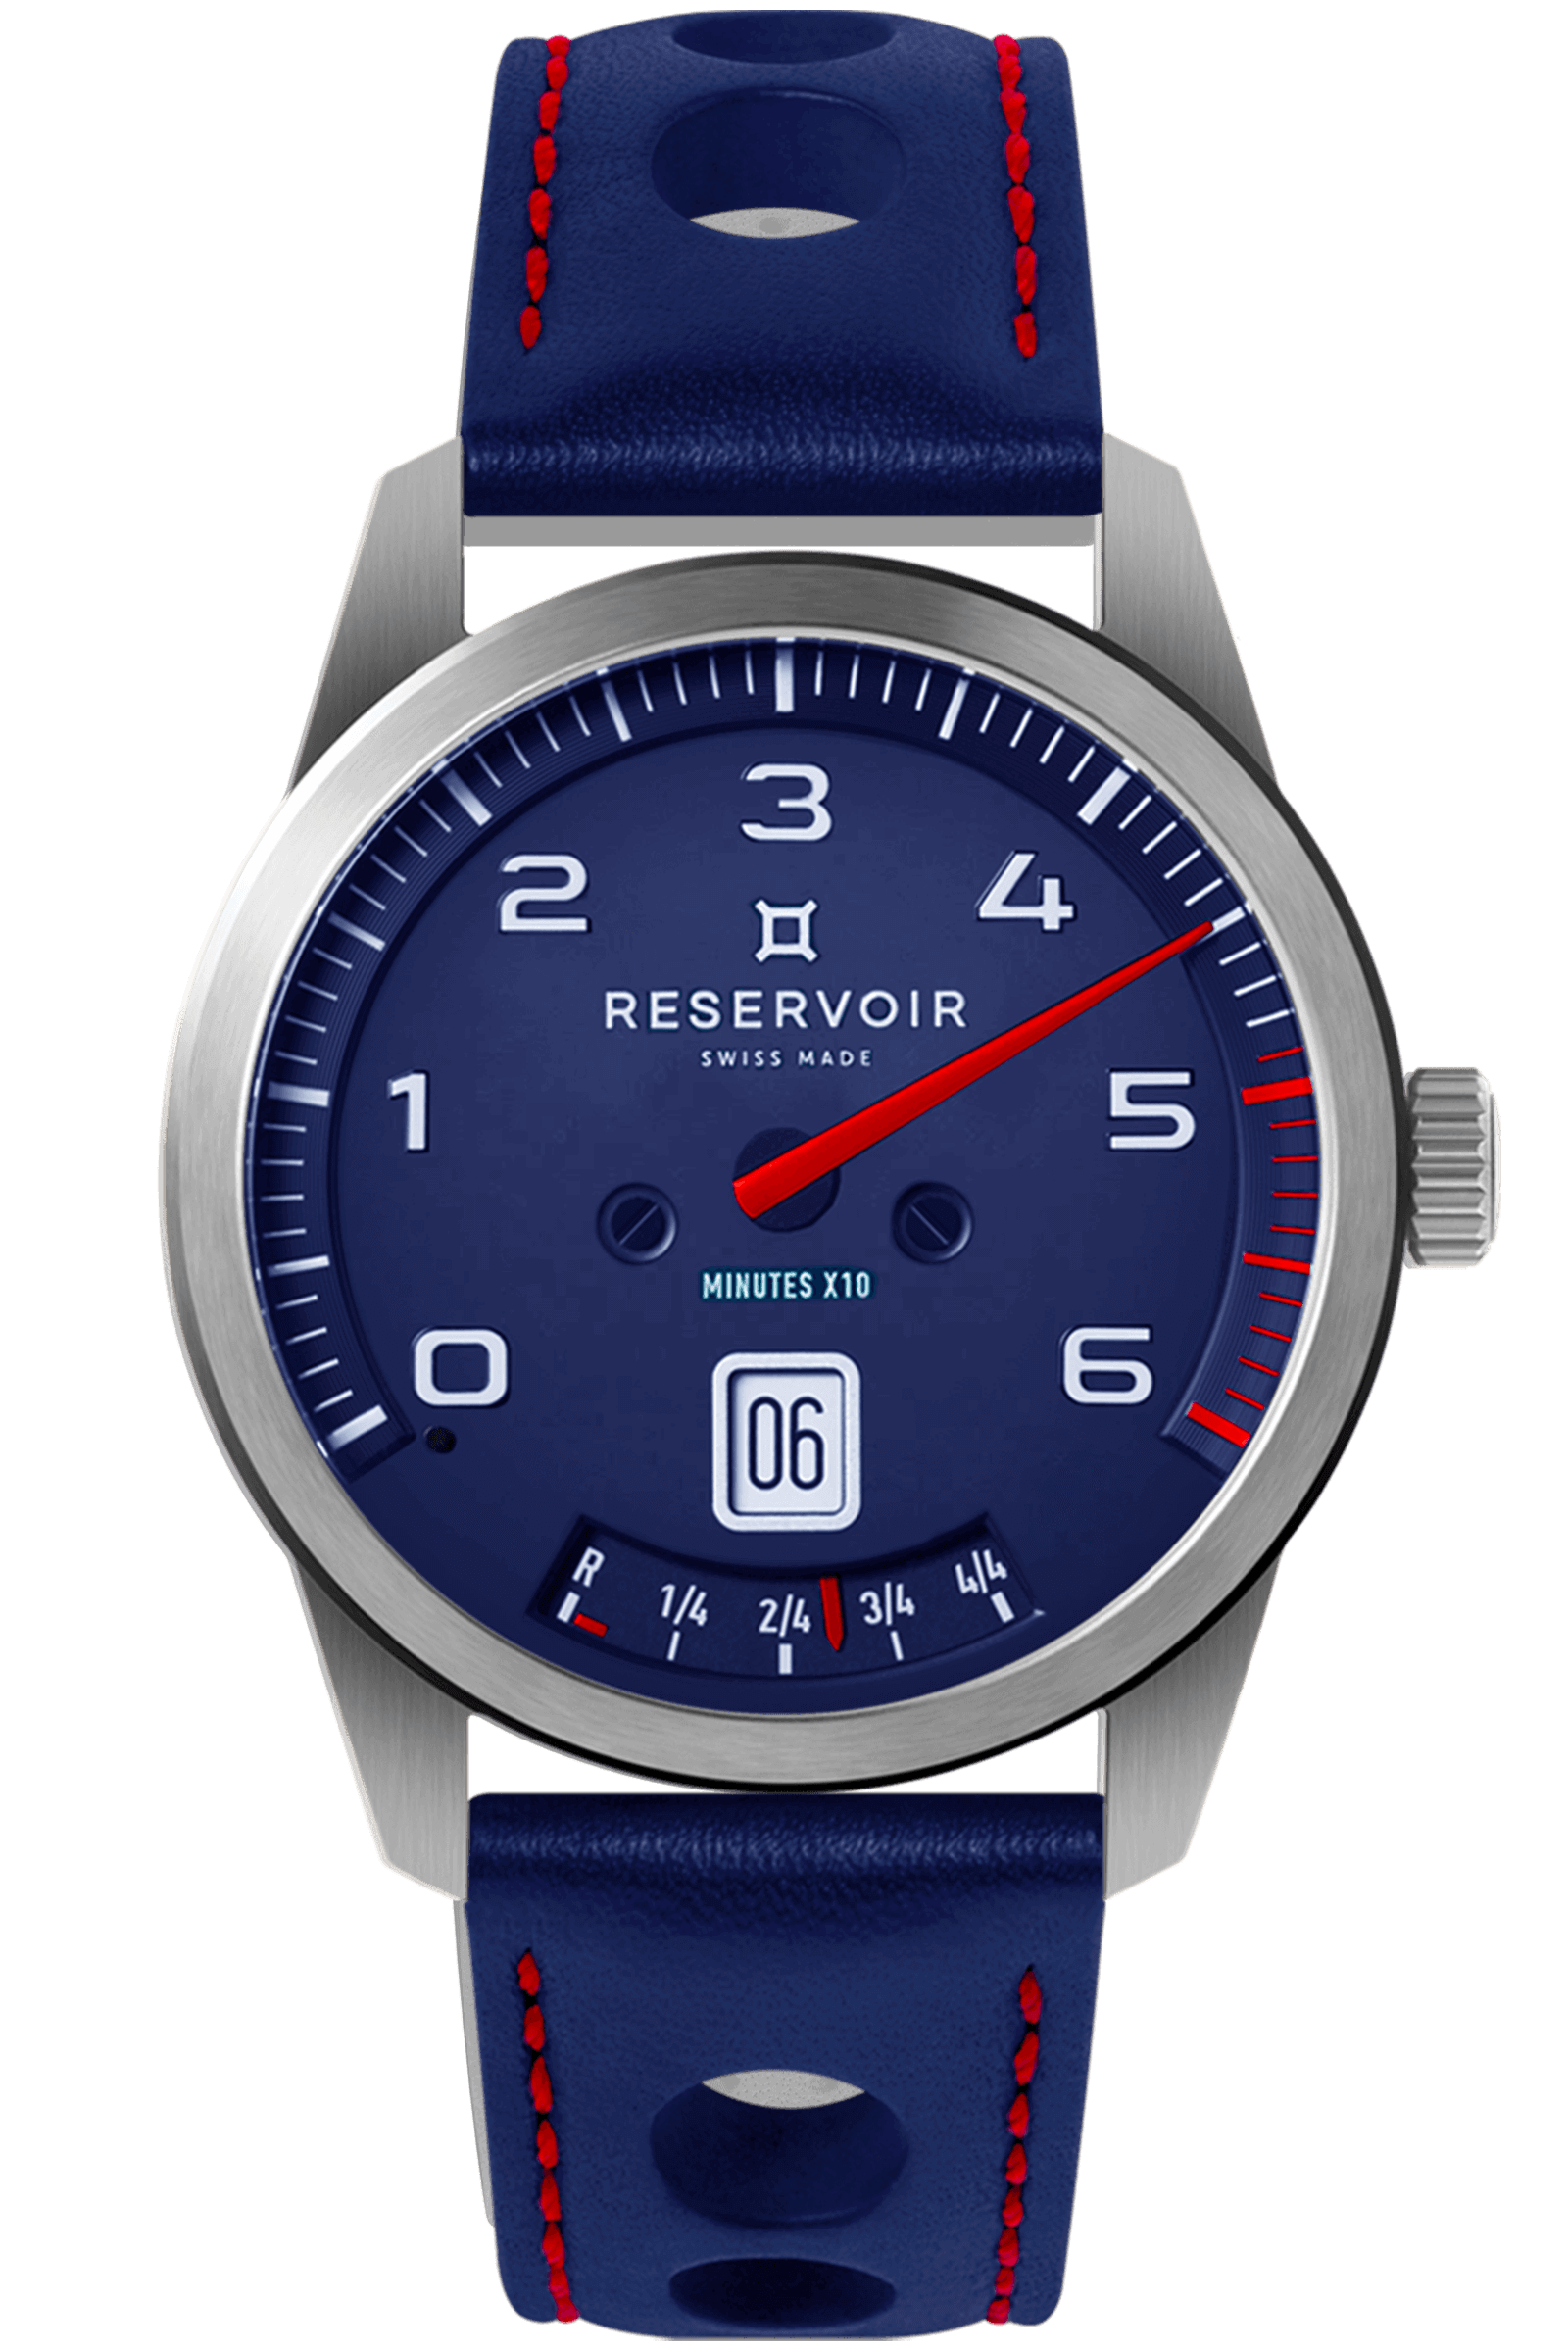 Media Editorial of Luxury RESERVOIR Watch in Dark Navy Blue, Light Grey, and Medium Grey.